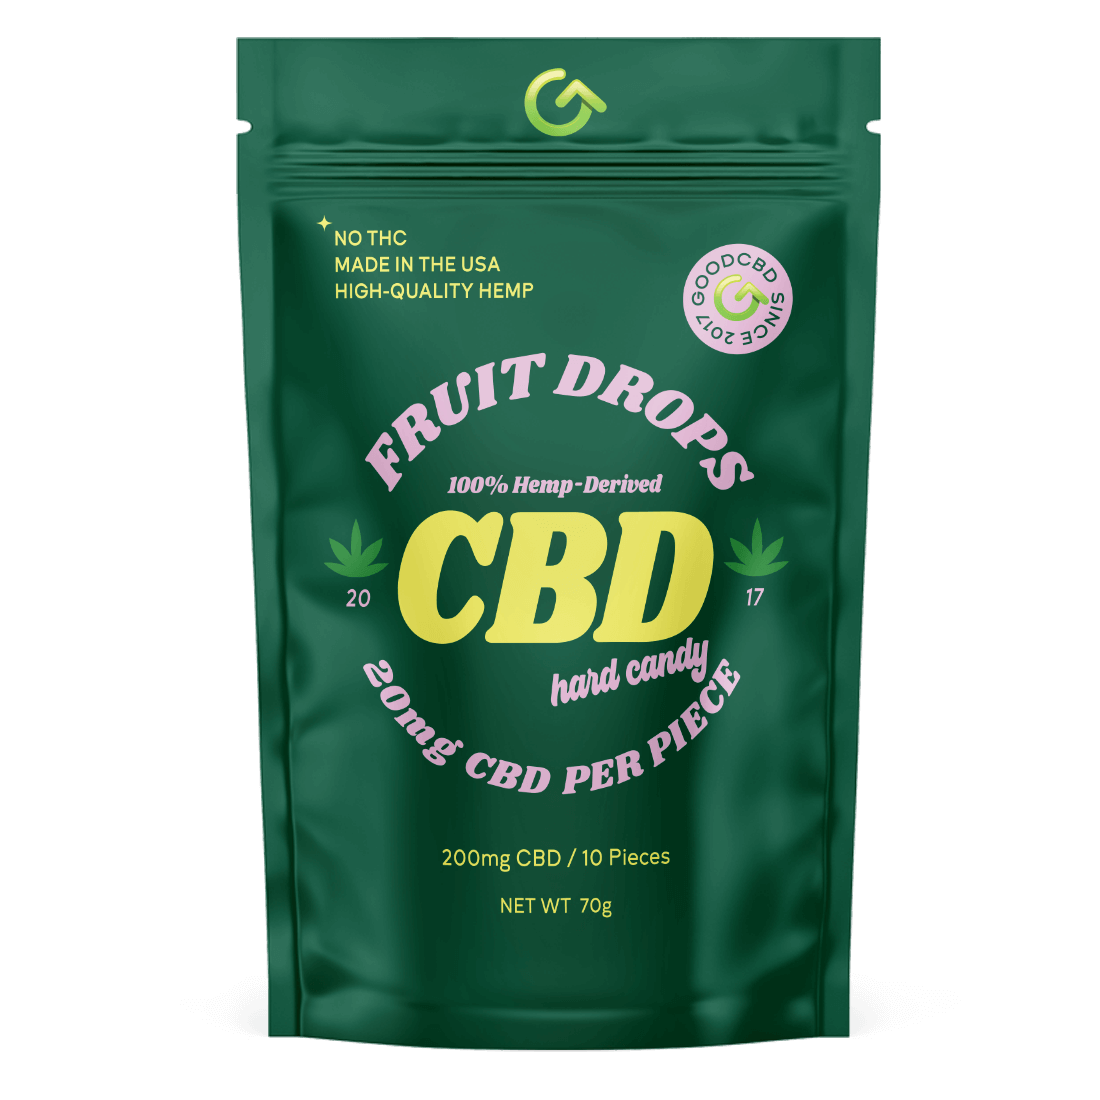 Good CBD brand CBD Hard Candy - Fruit Drops - 20mg CBD Each